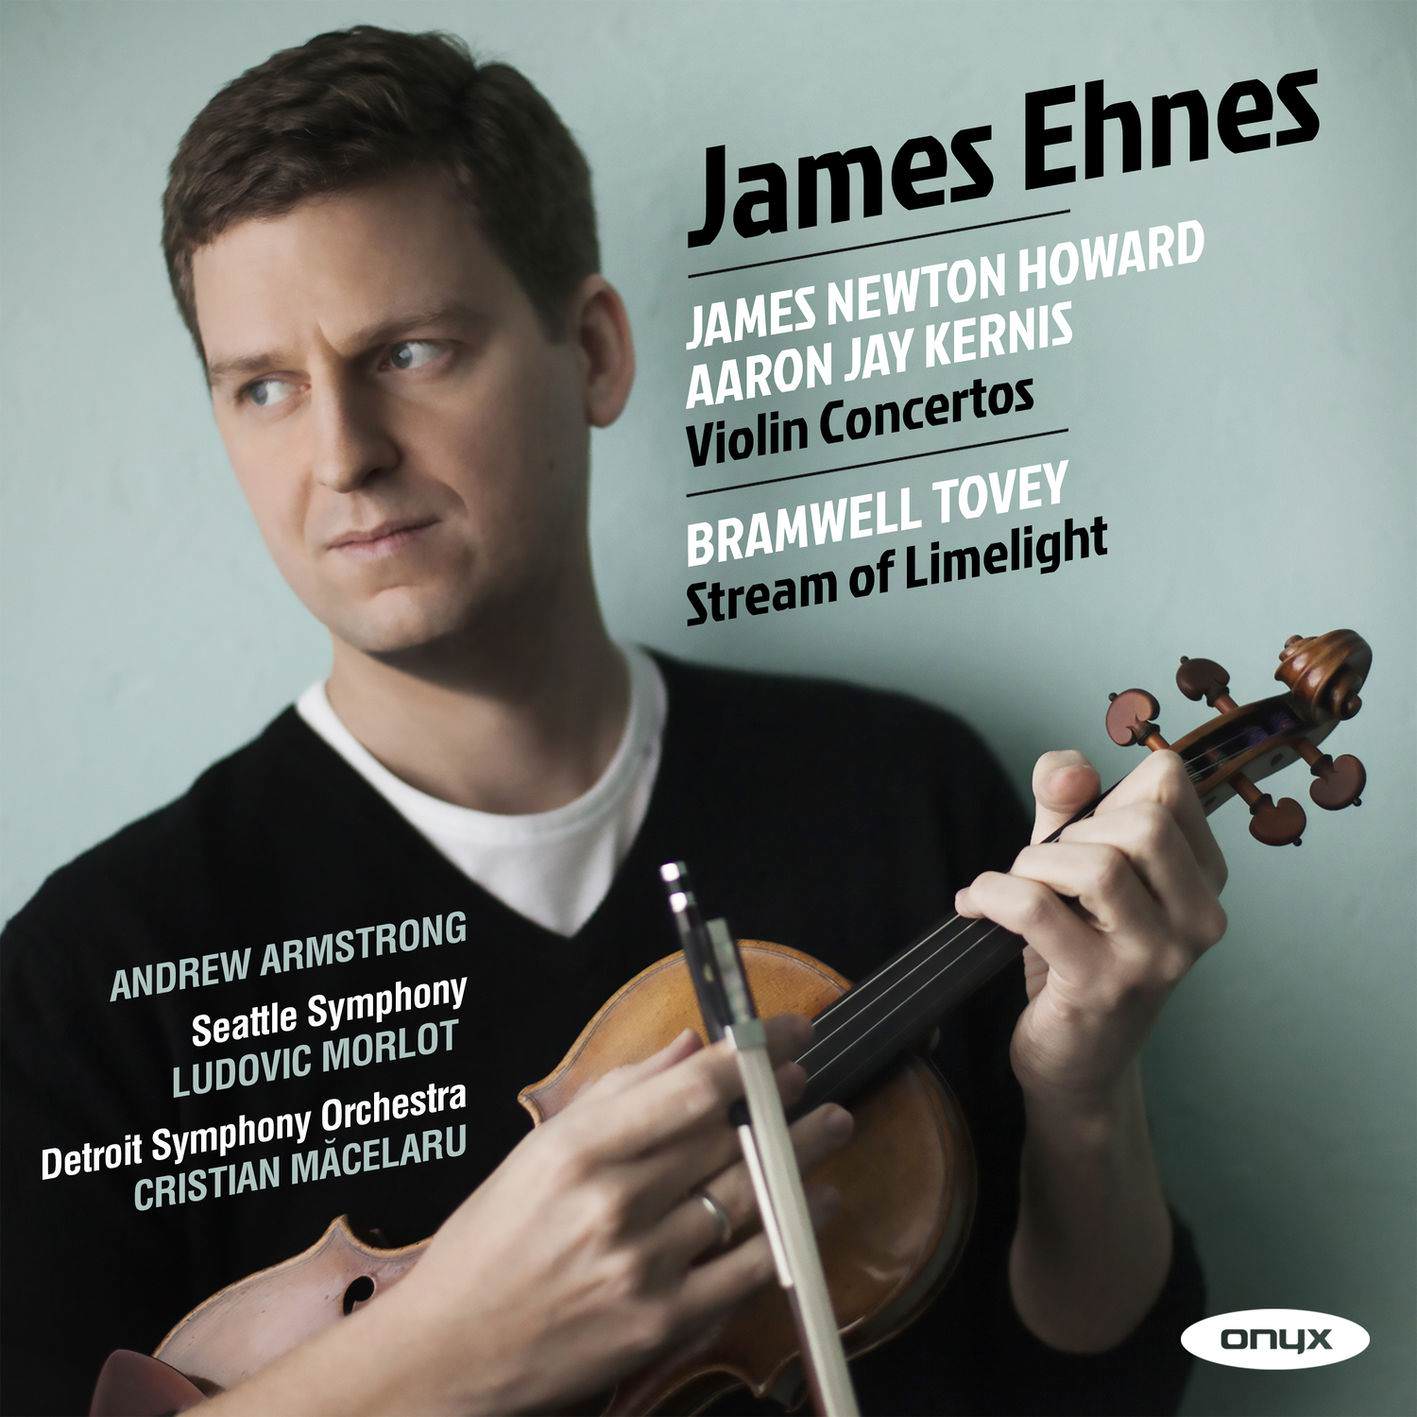 James Ehnes – James Newton Howard, Aaron Jay Kernis Violin Concertos, Bramwell Tovey, ‘Stream of Limelight’ (2018) [FLAC 24bit/96kHz]